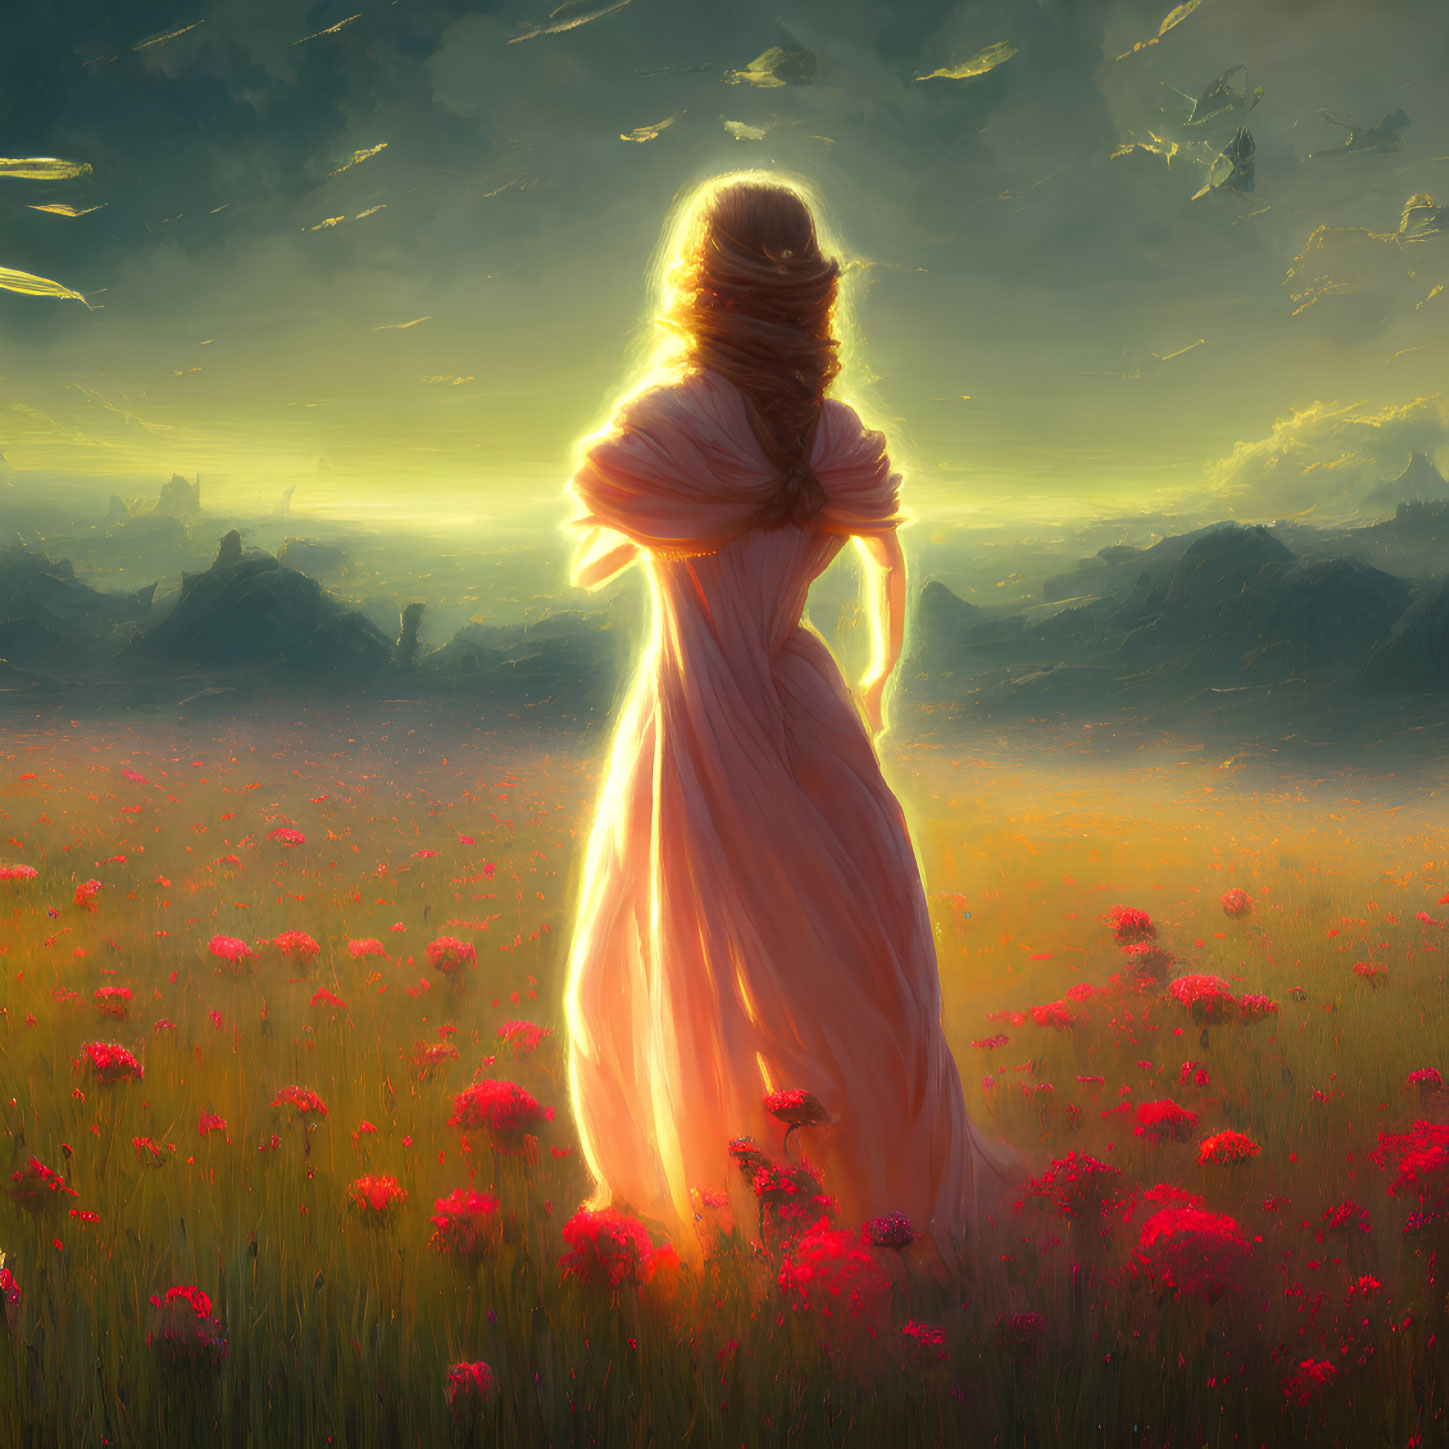 Woman in flowing dress admiring sunset in flower-filled meadow